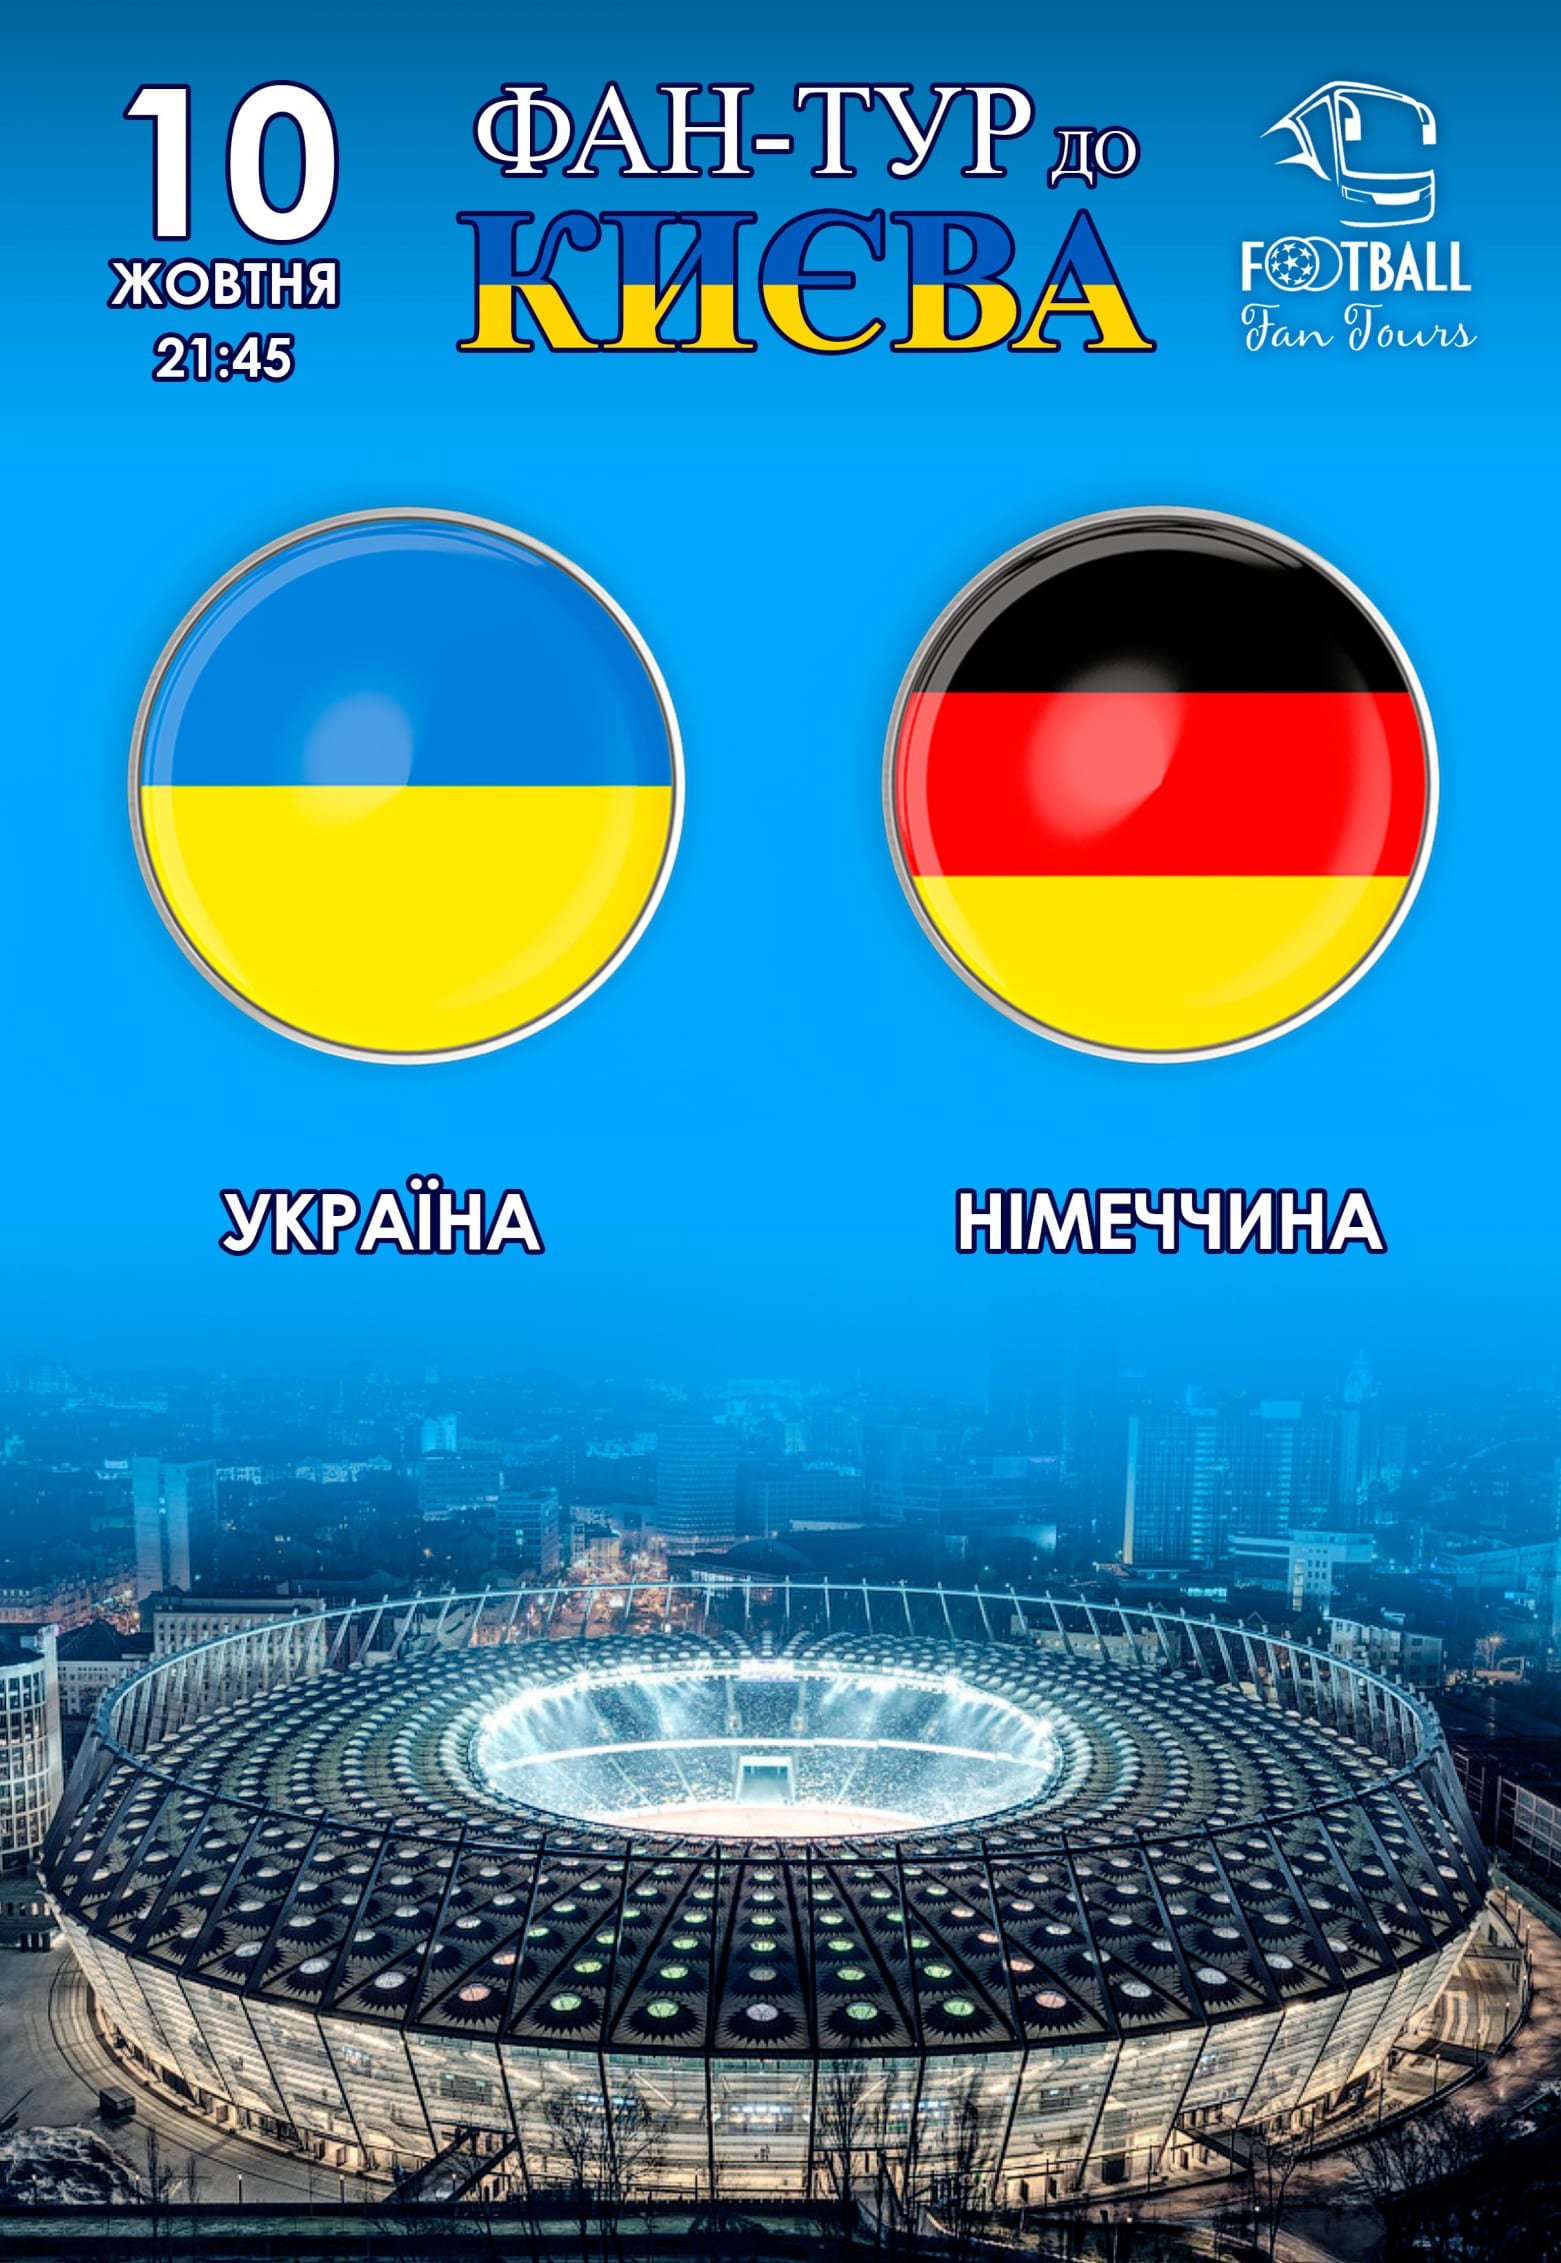 Фан-тур на матч Украина - Германия Днепр, 10.10.2020, цена, даты. Афиша Днепра